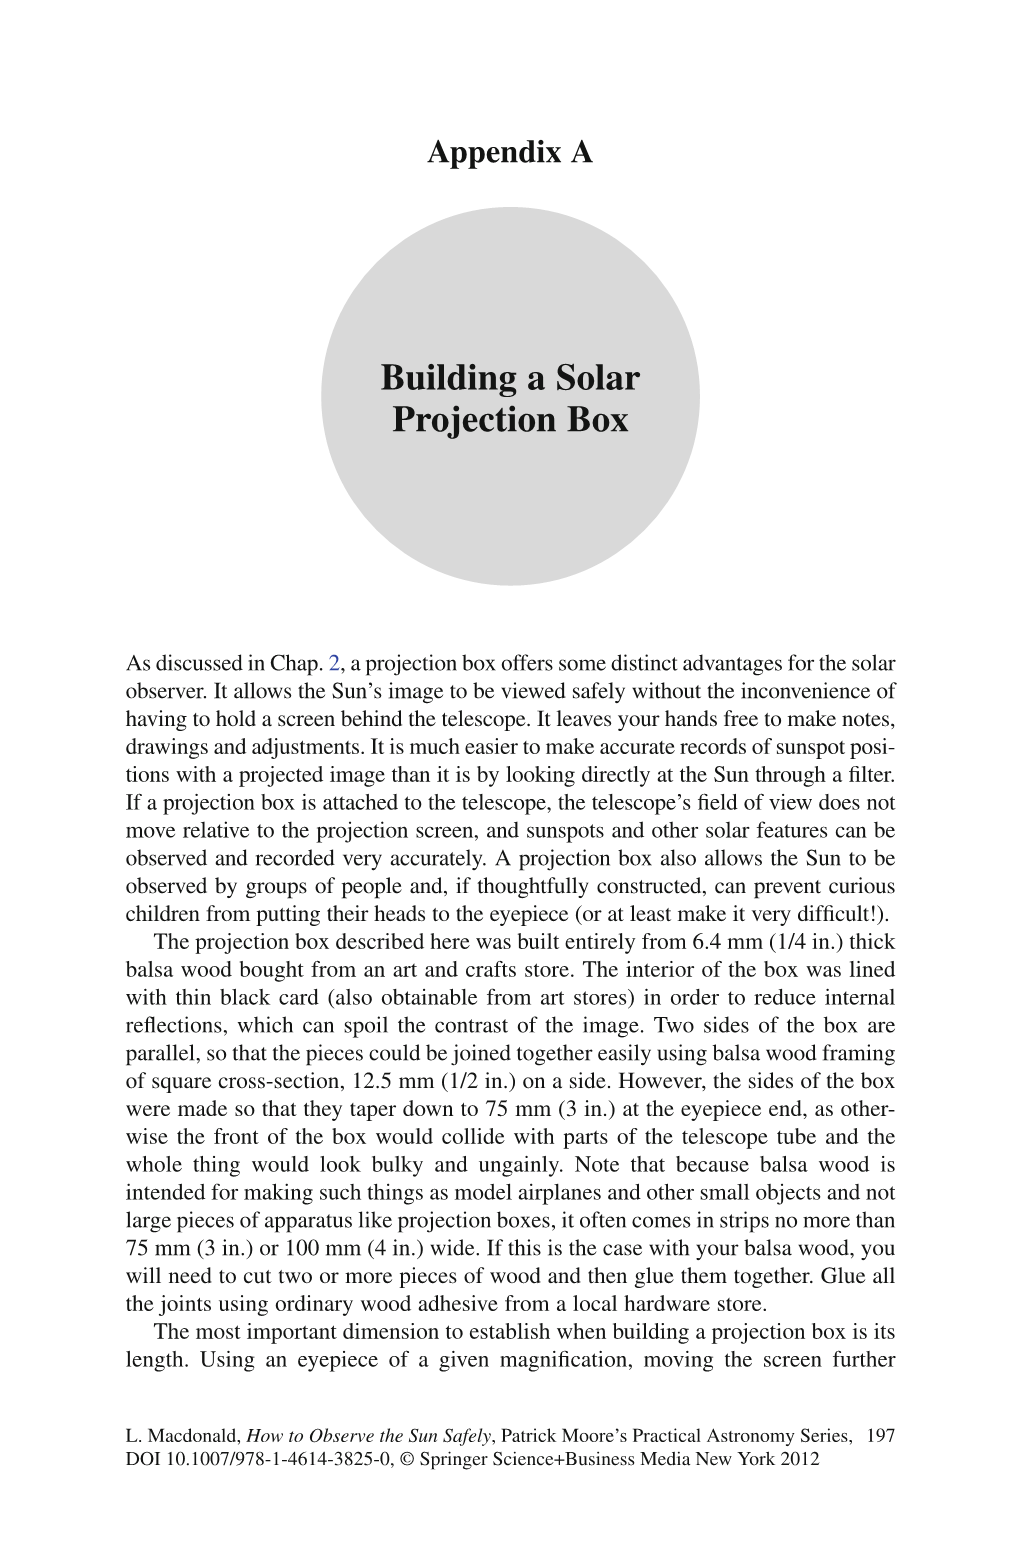 Building a Solar Projection Box